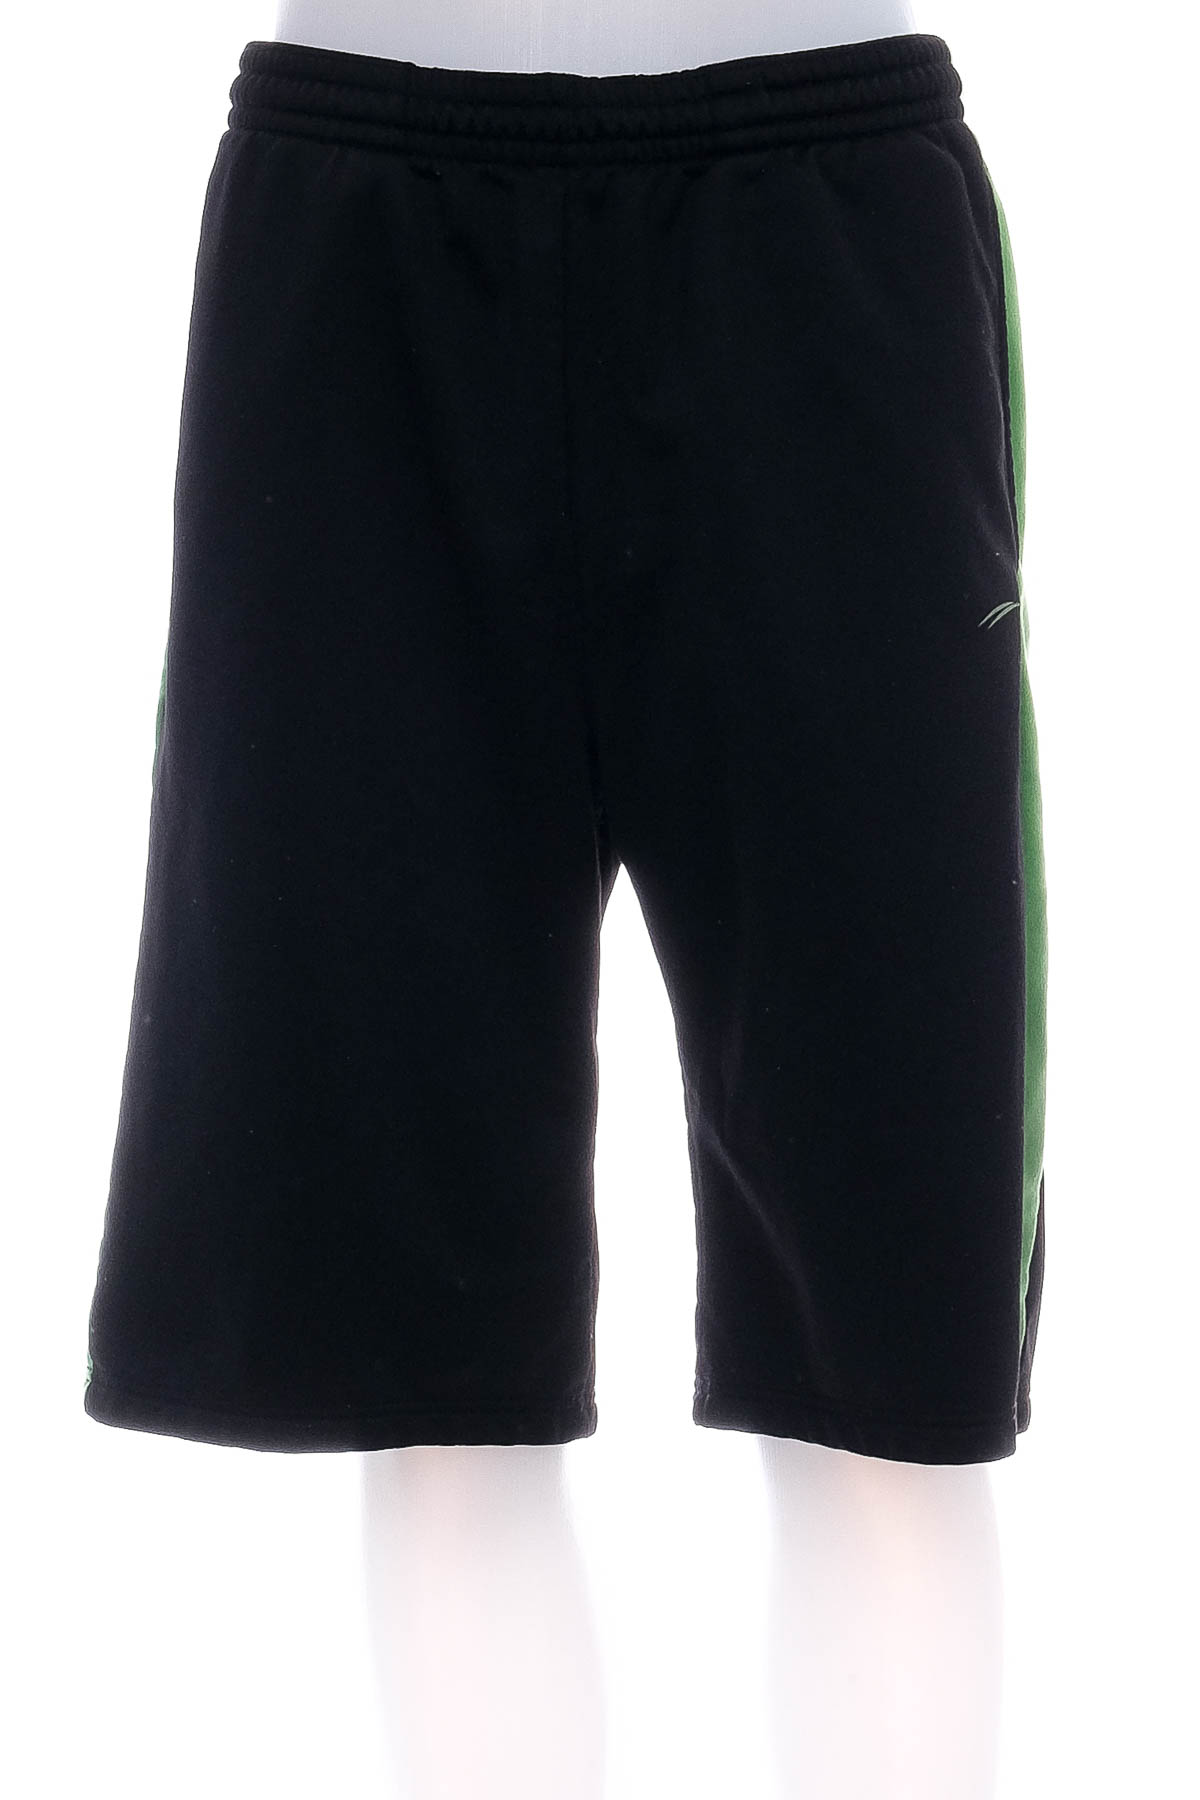 Men's shorts - Mc Gorry - 0